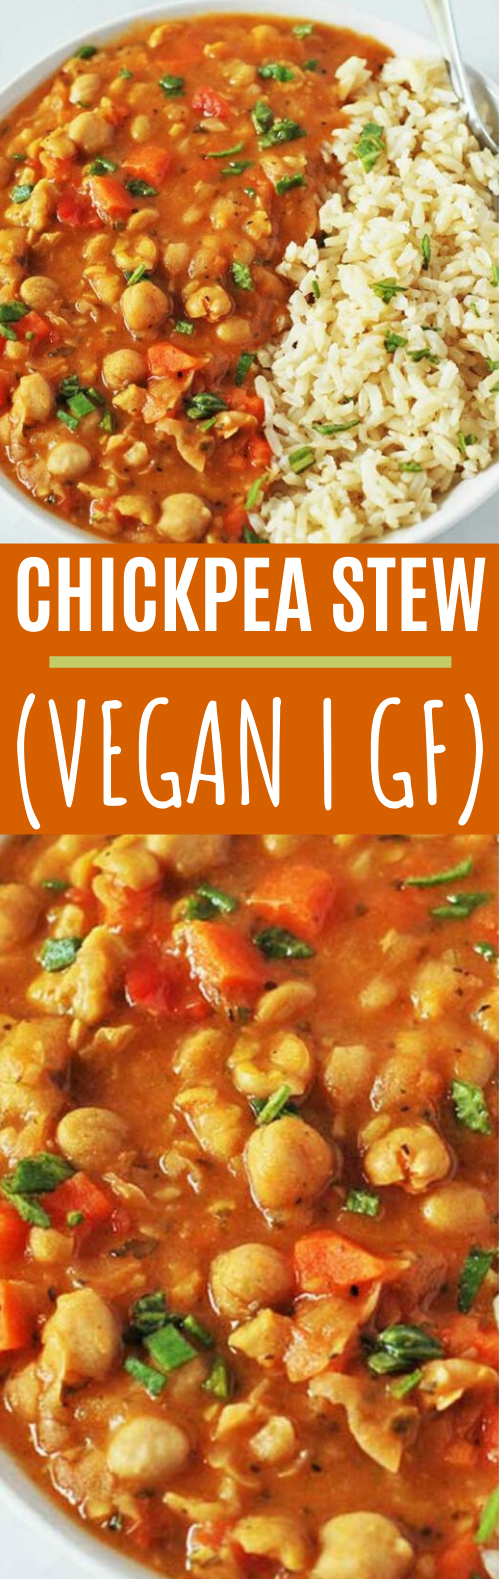 Chickpea Stew (Vegan, Gluten-free) #vegan #recipes #dinner #meatless #comfortfood